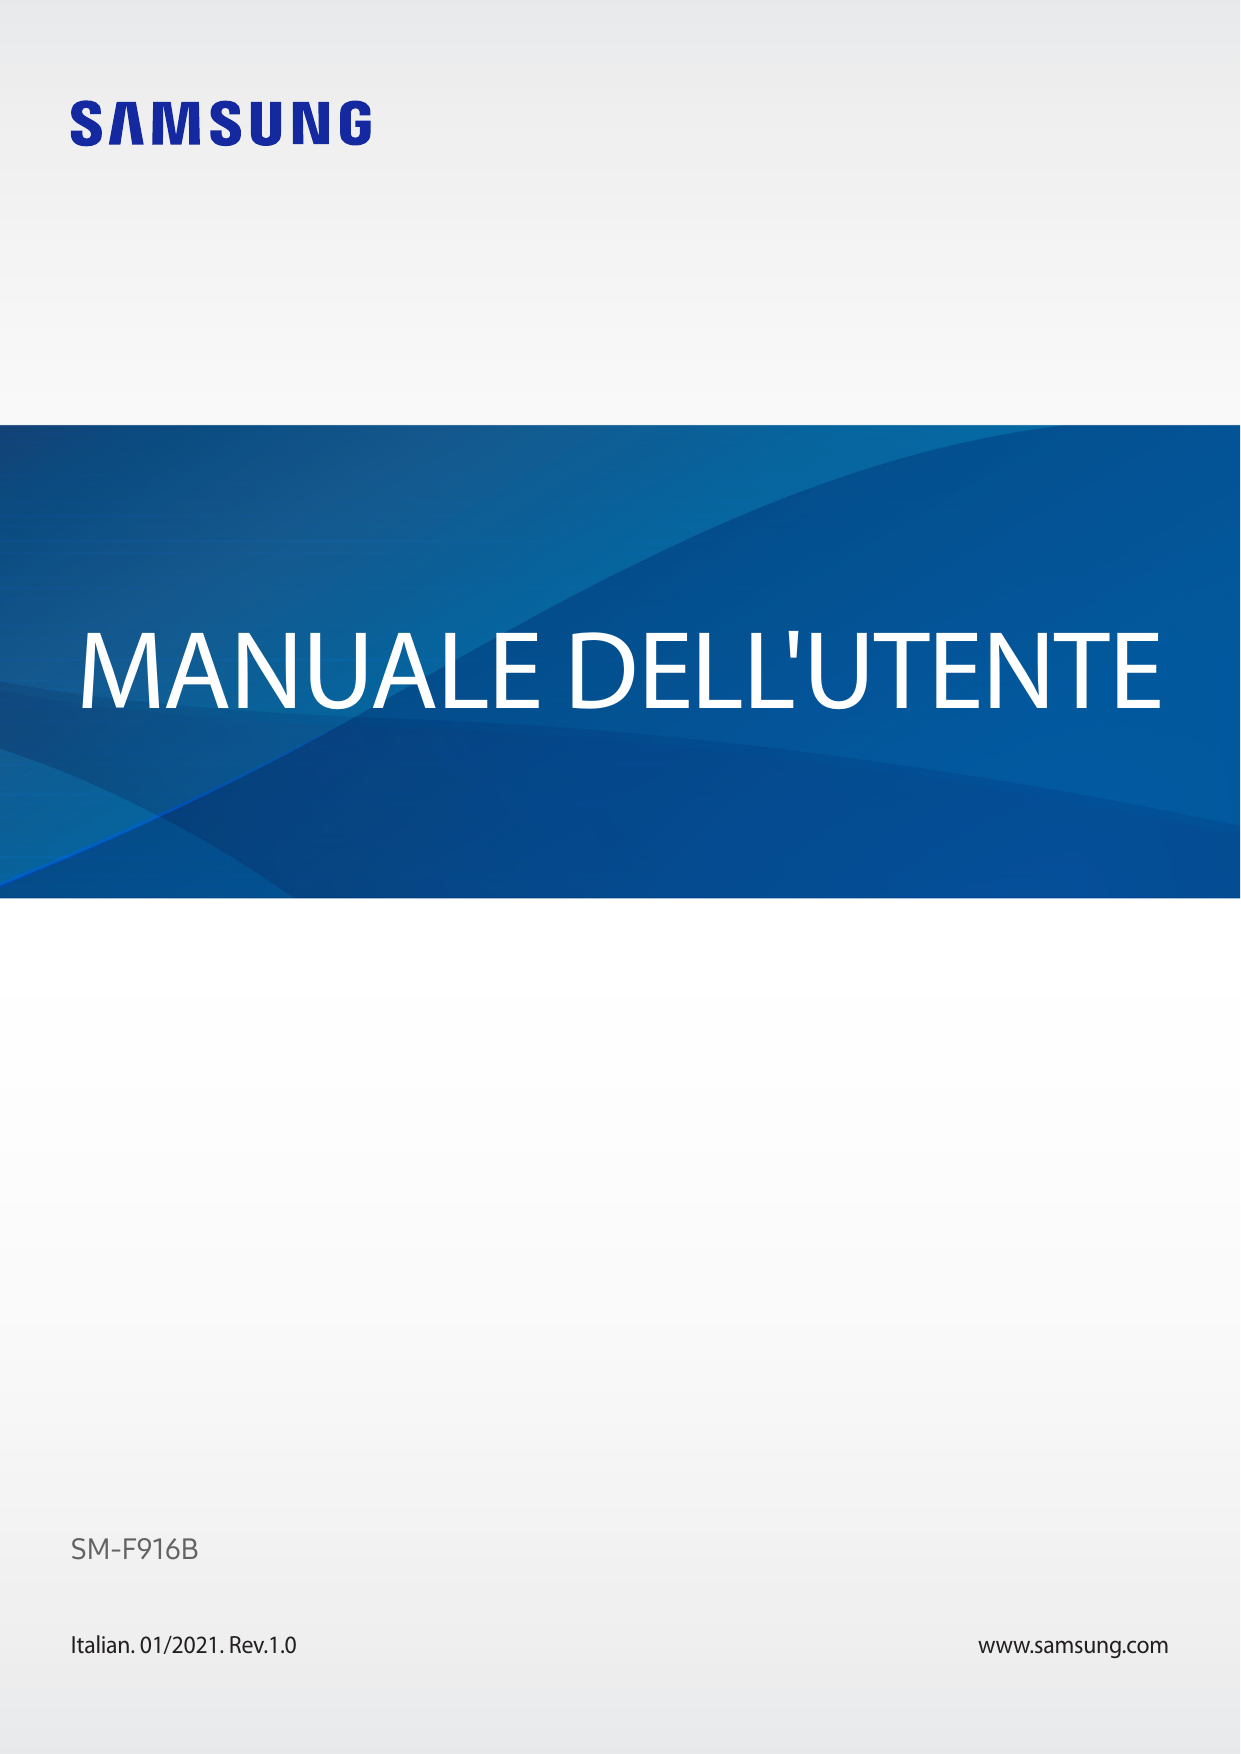 MANUALE DELL'UTENTESM-F916BItalian. 01/2021. Rev.1.0www.samsung.com